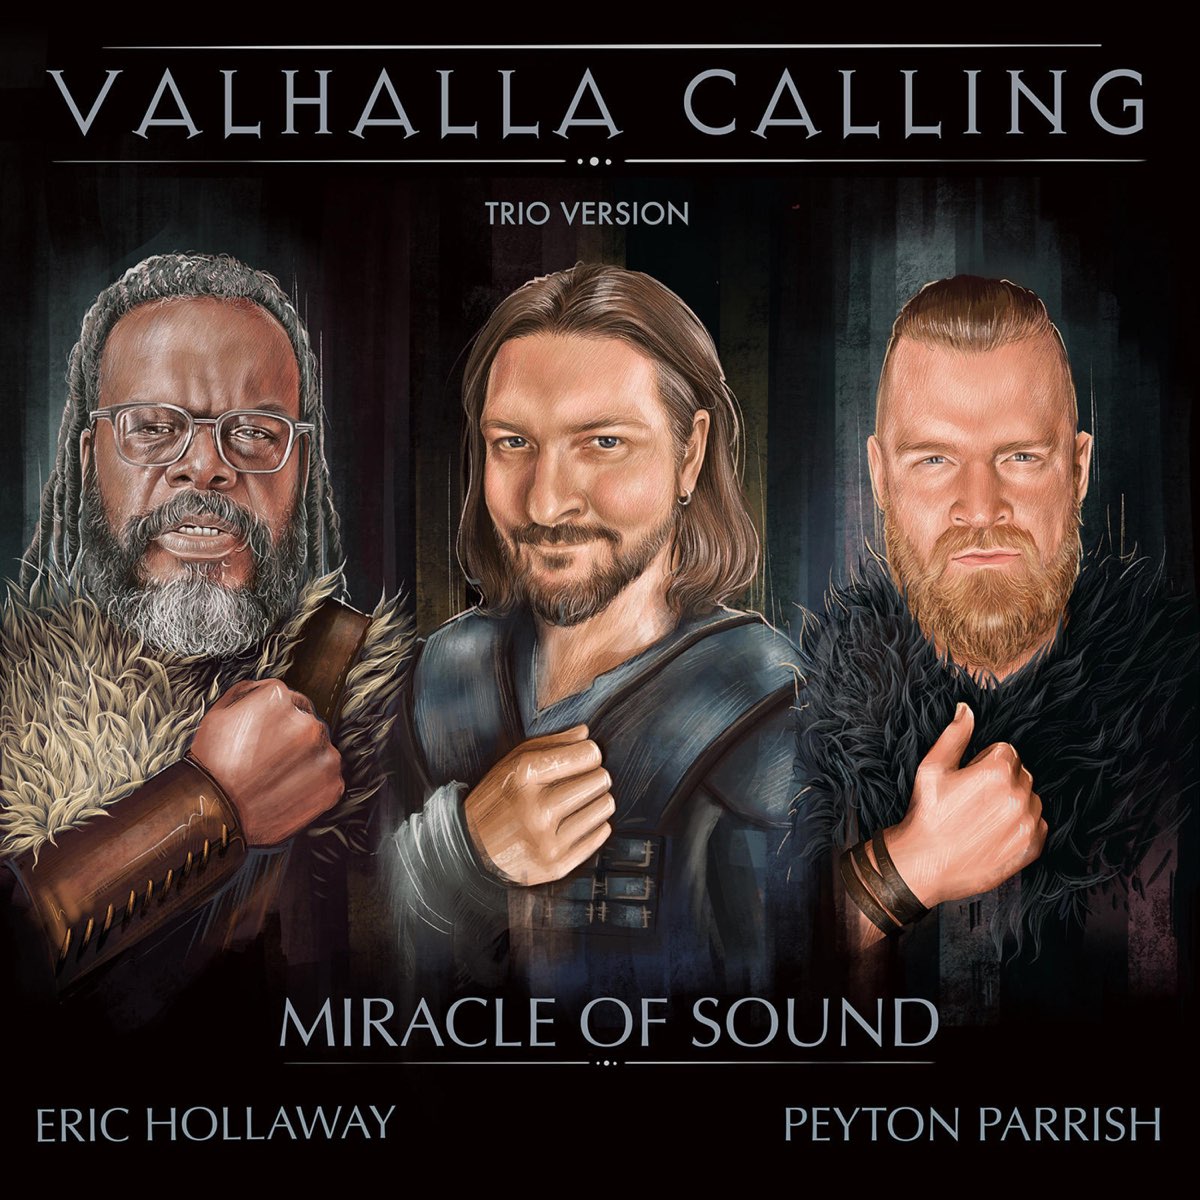 Valhalla calling feat peyton parrish mp3 download